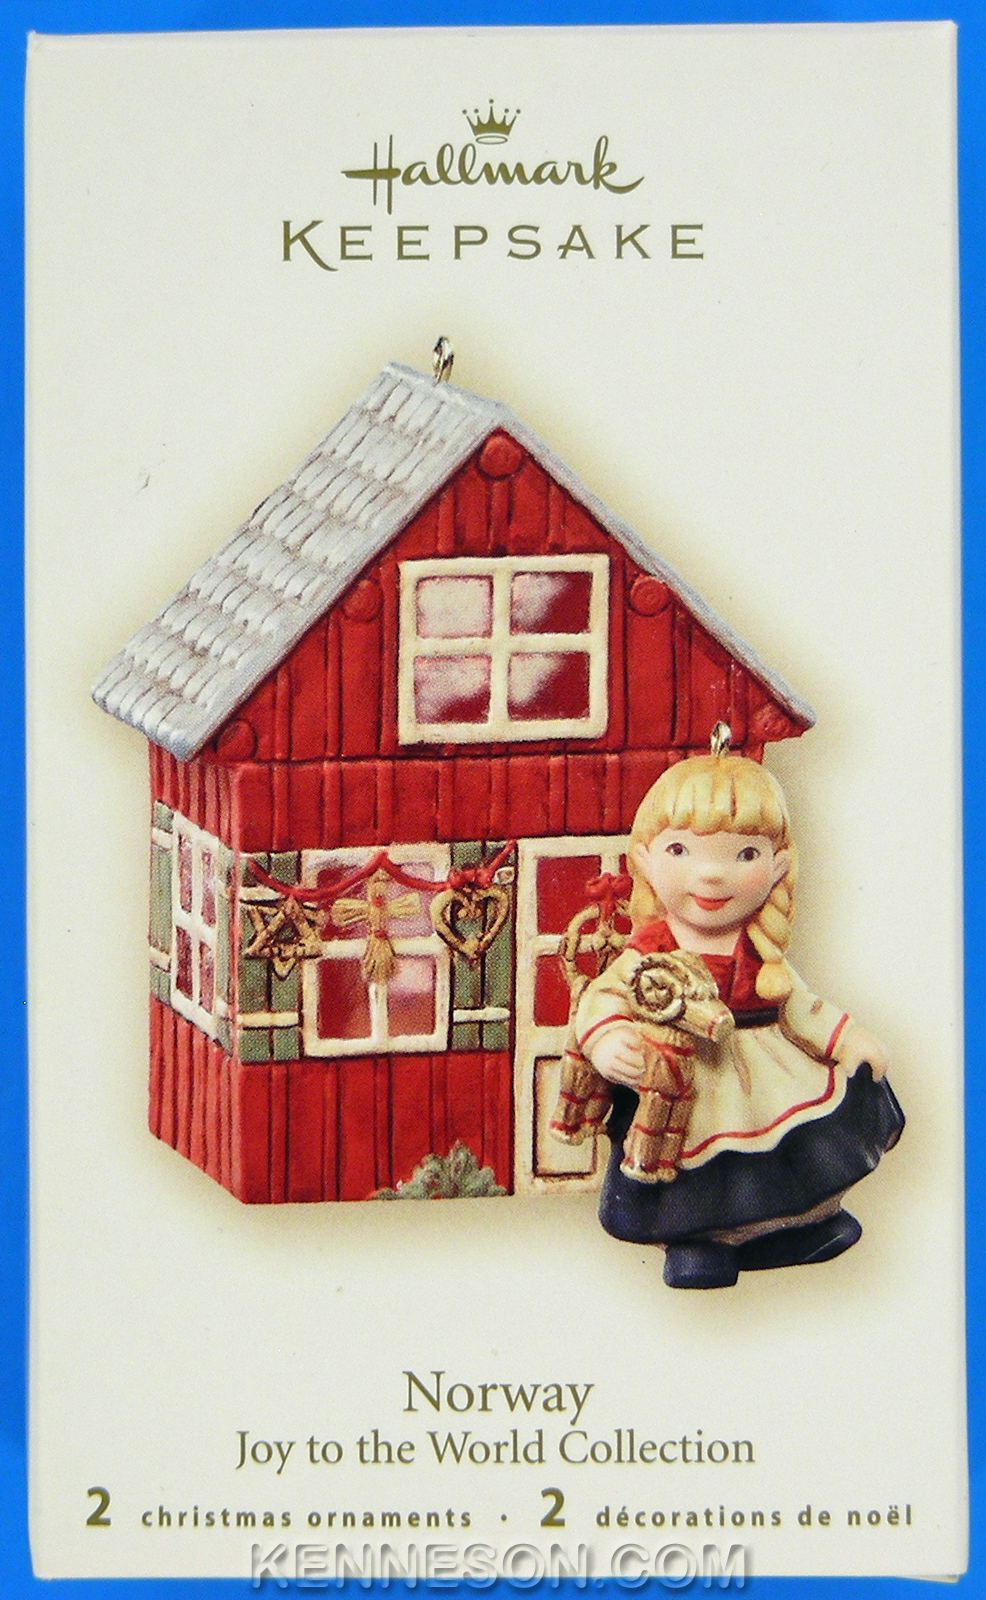 Joy to the World Collection Norway 2 Hallmark Keepsake Christmas Ornaments 2007 | eBay